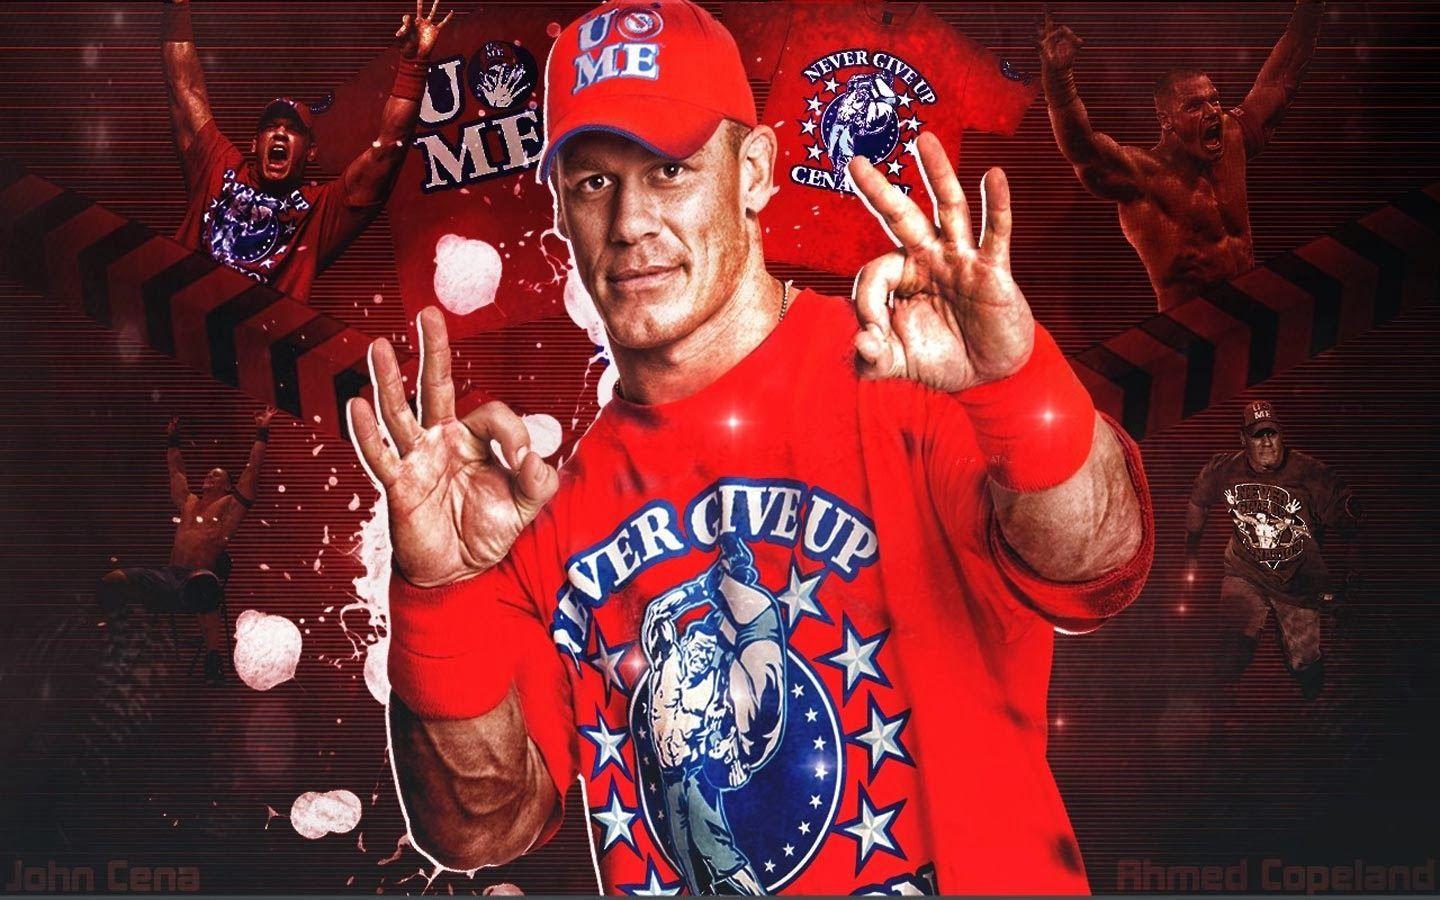 John Cena 2014 Shirt